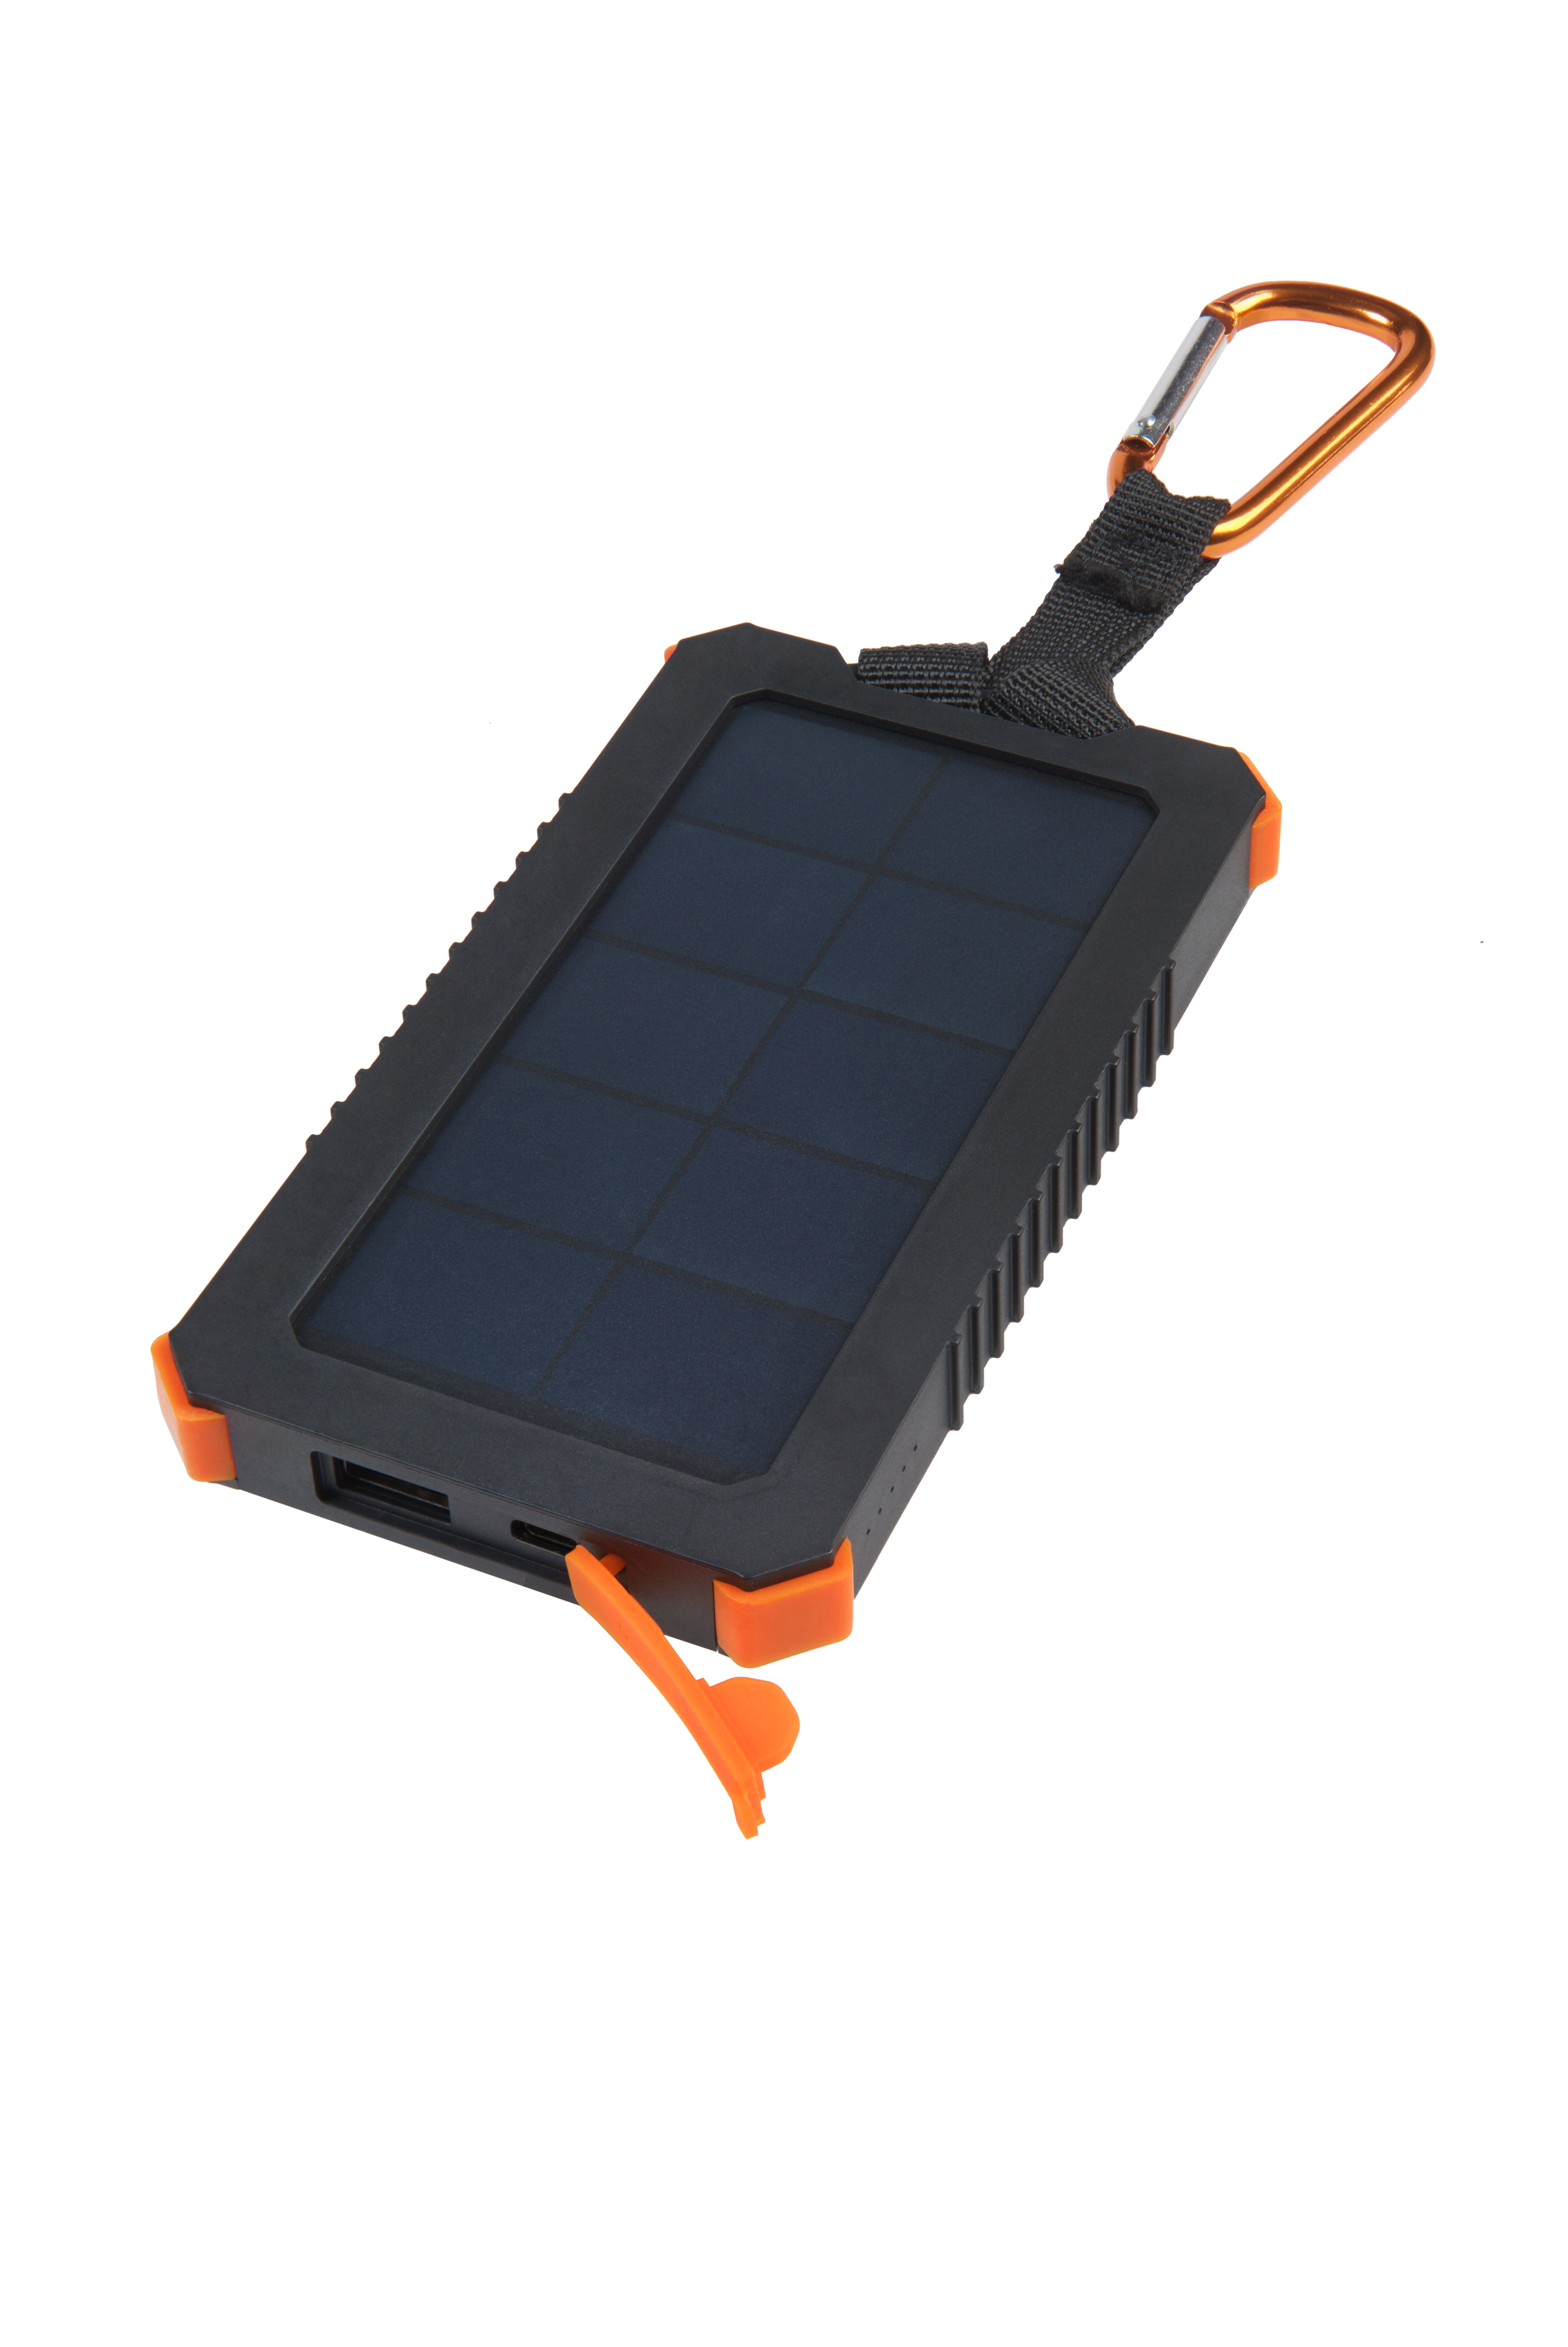 Powerbank Xtorm Xtreme Power Pack solar module 5000 mAh